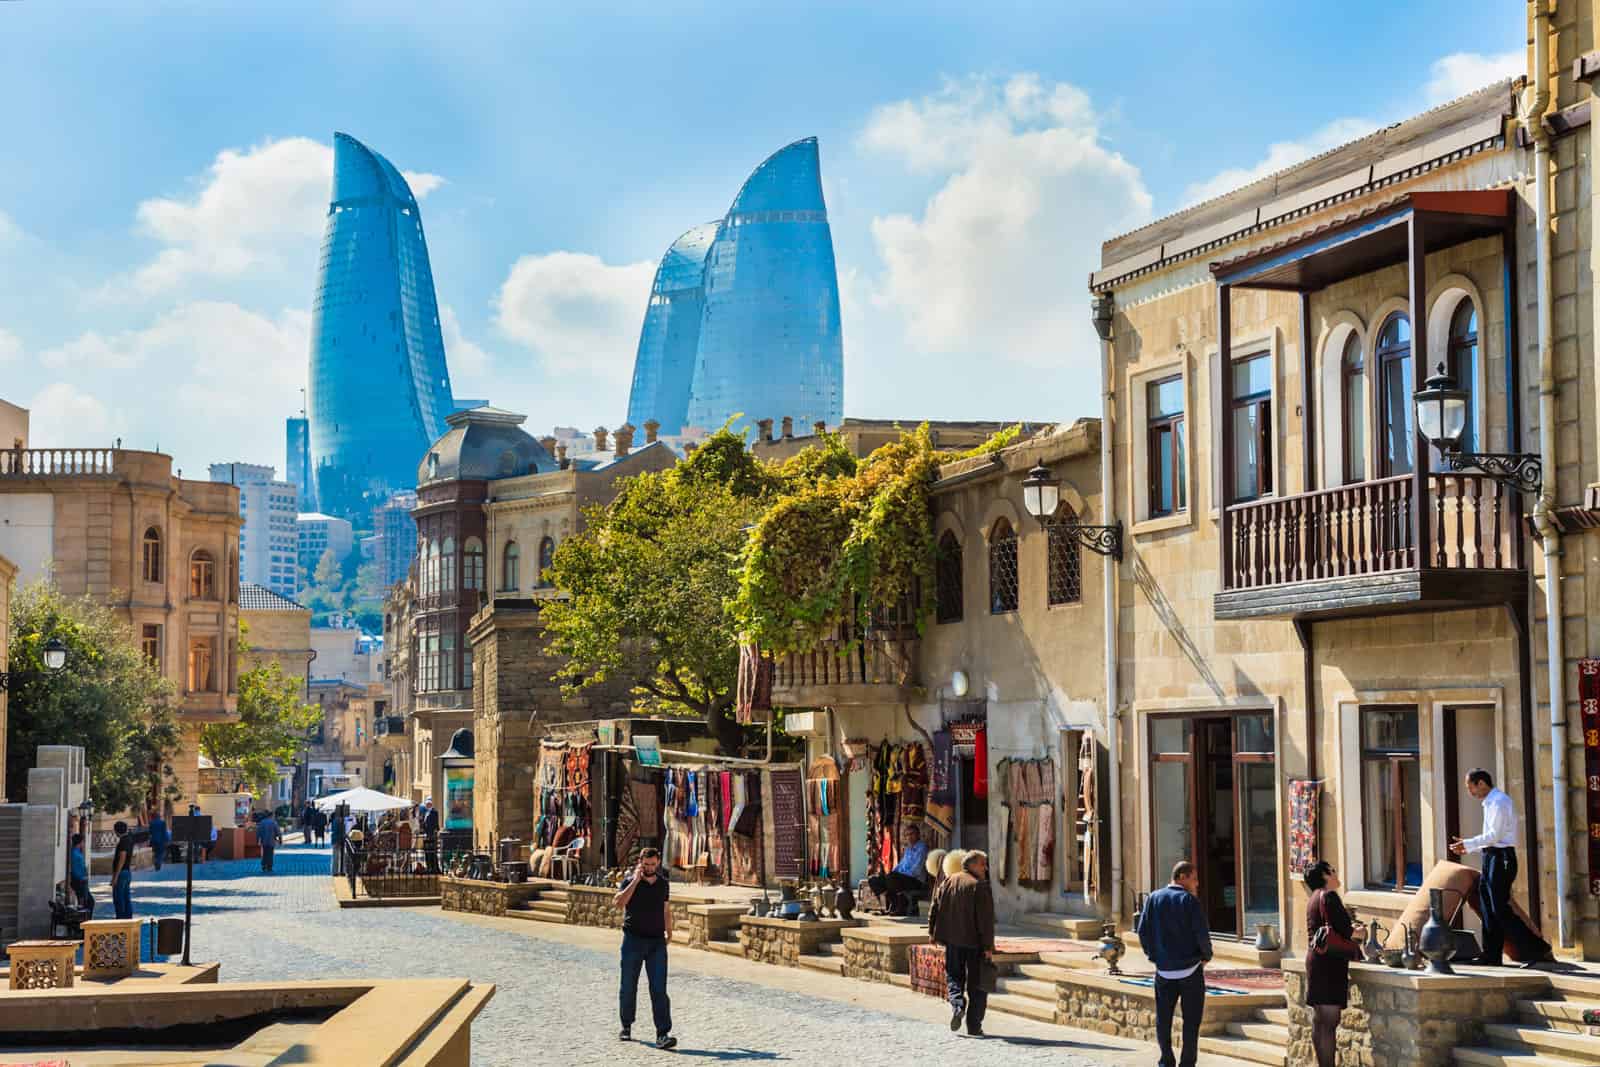 Azerbaijan Travel Insurance